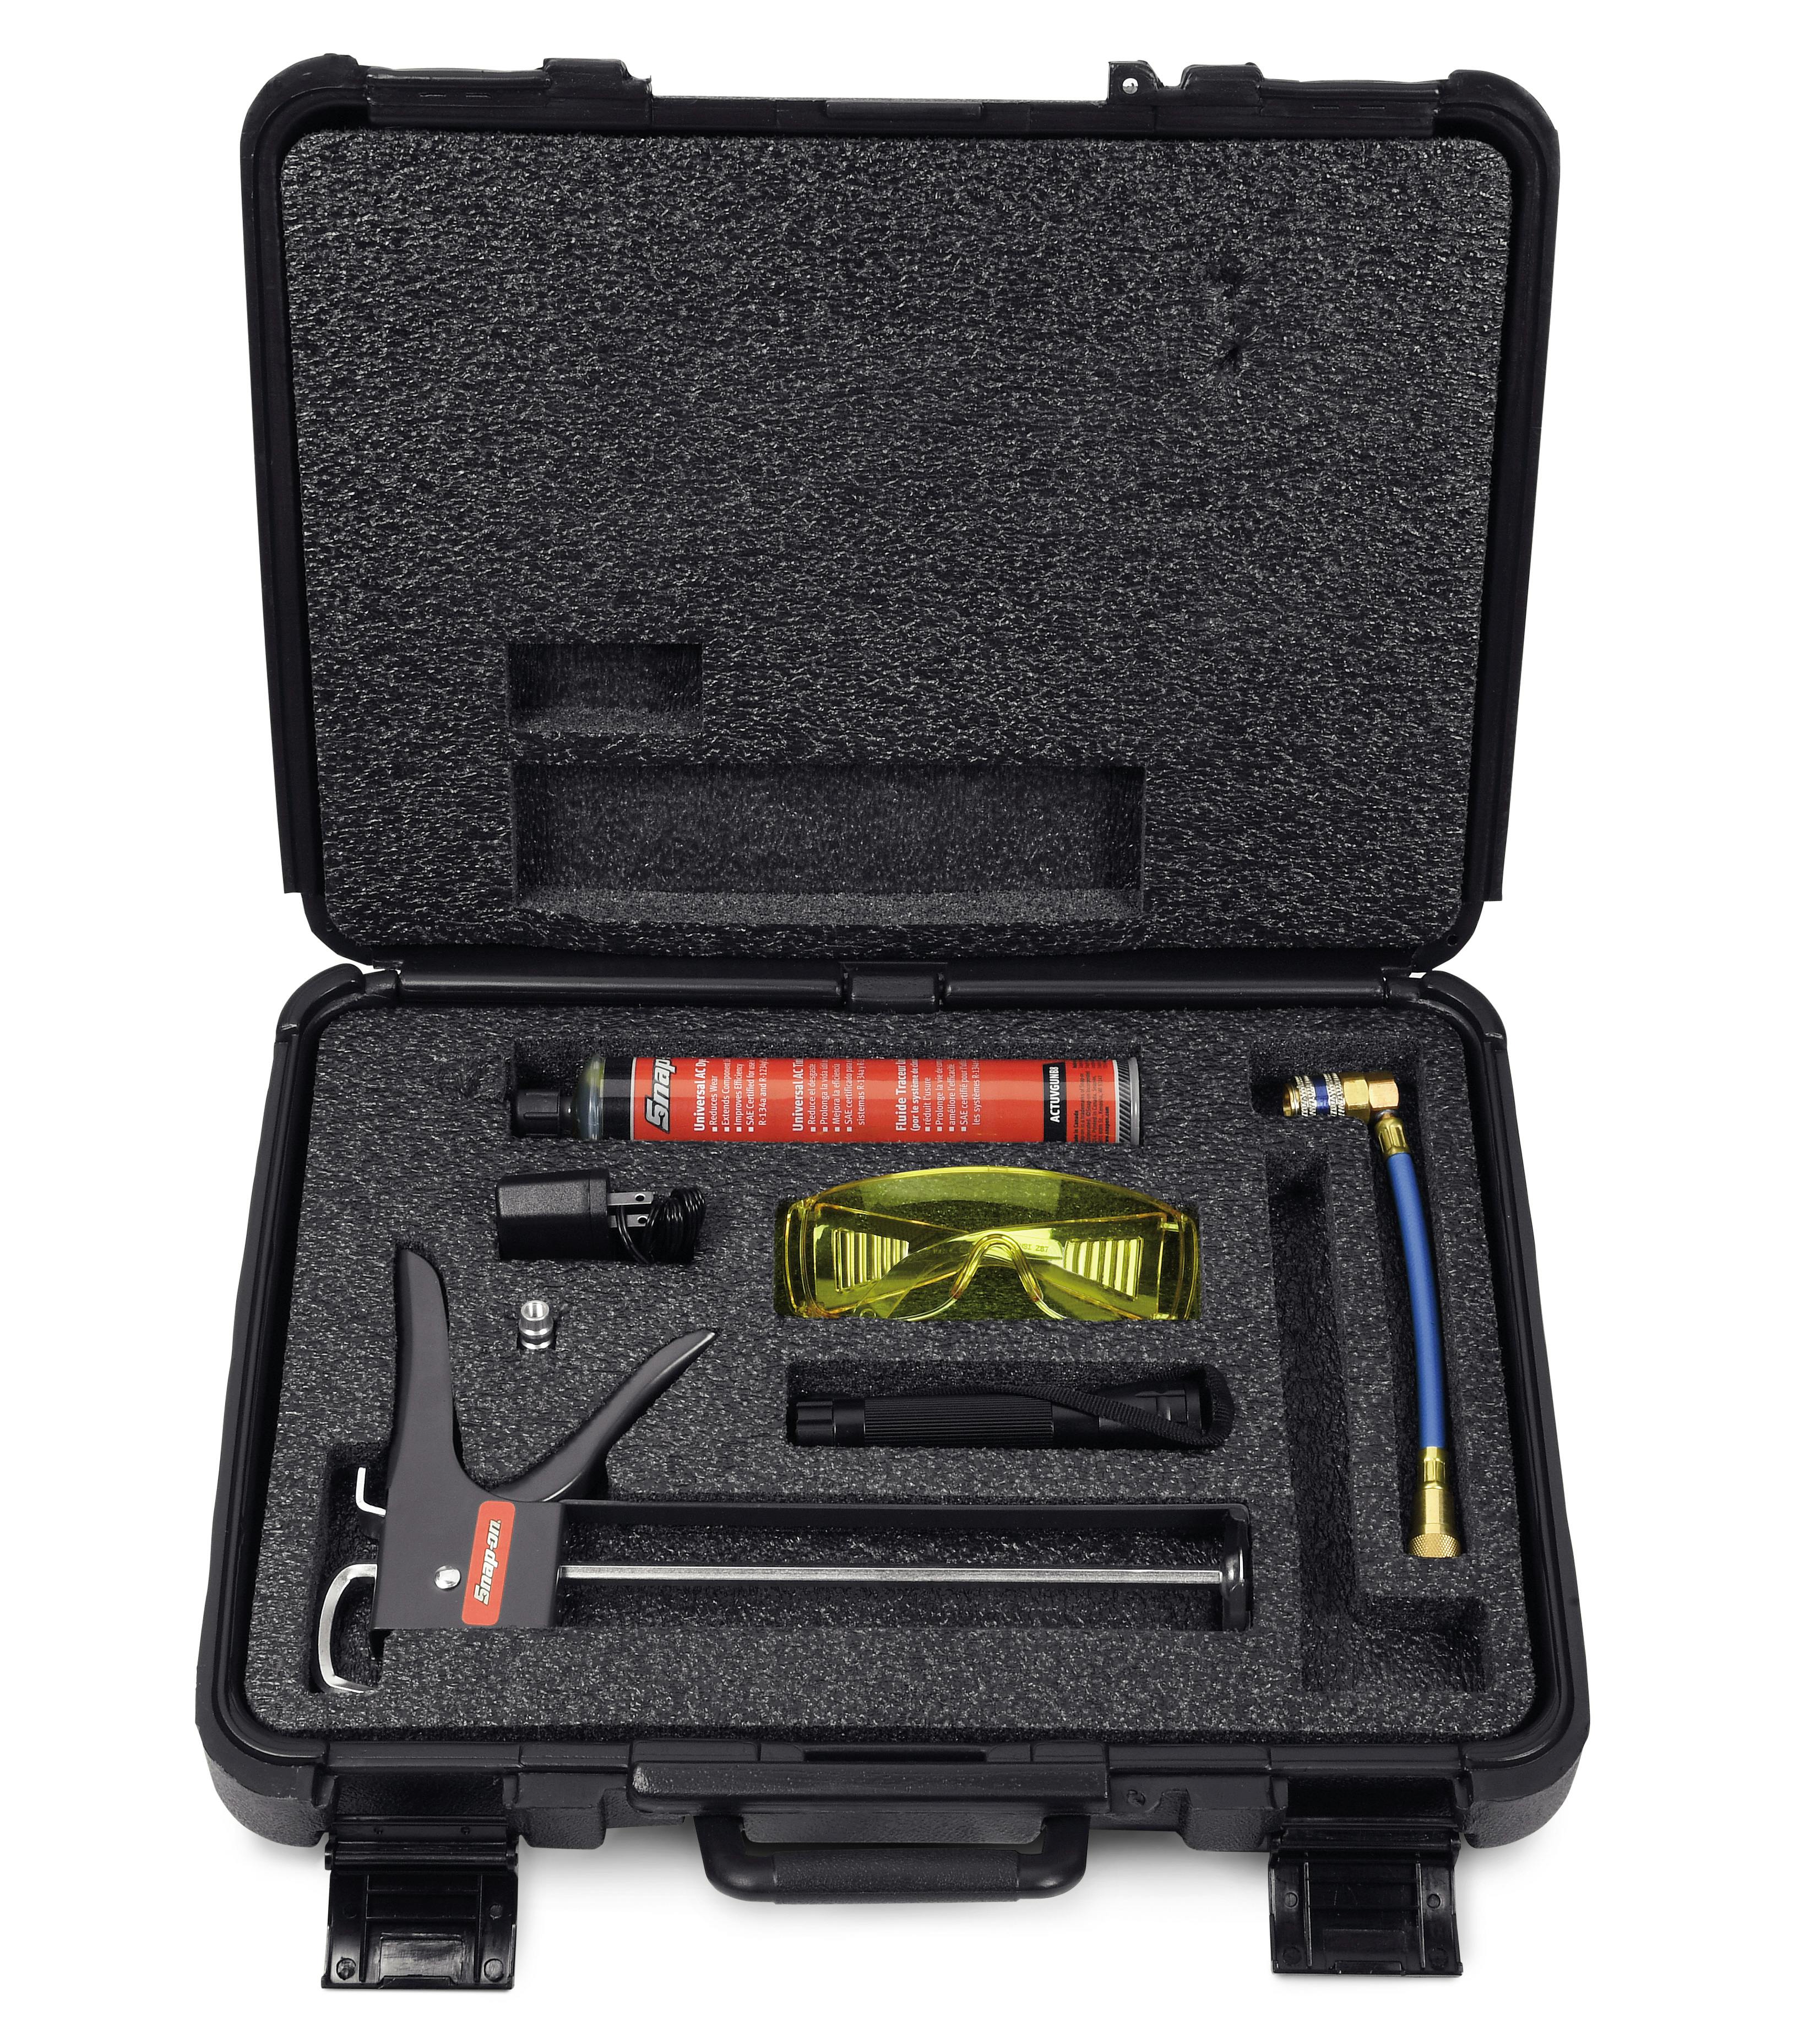 R12/R134a UV Leak Detection Kit | ACTUVKITD | Snap-on Store